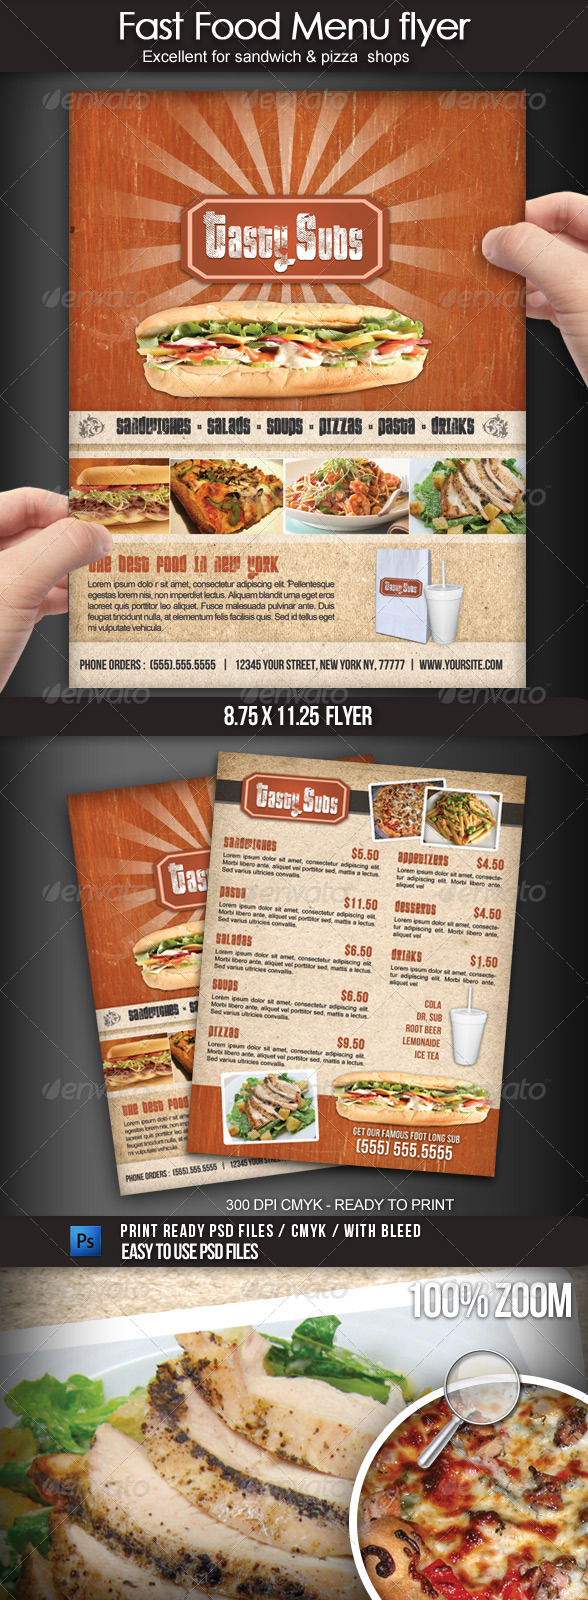 Fast Food Menu Design Templates